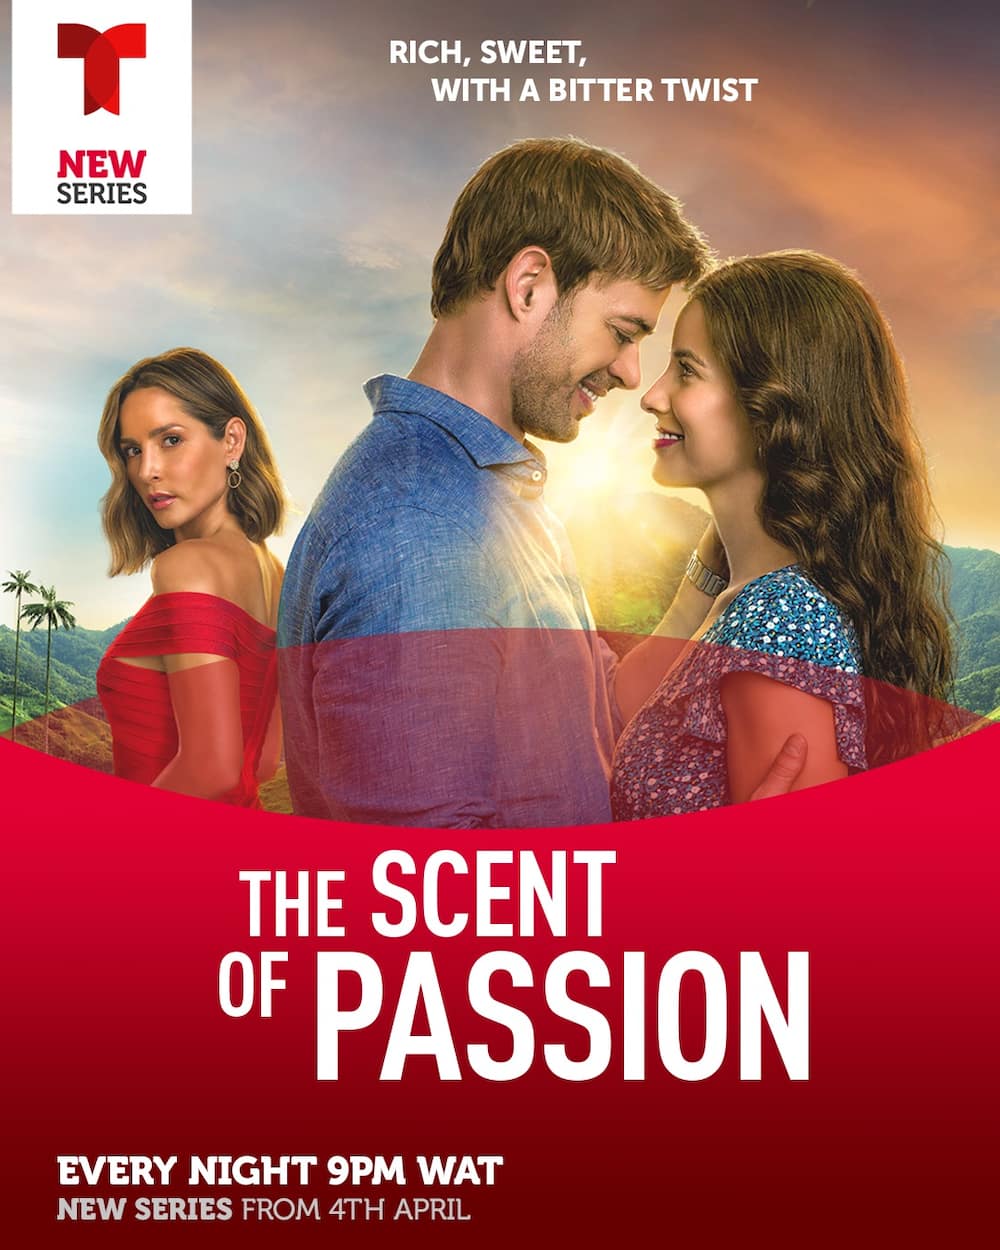 The scent of passion Telemundo: Cast, full story, plot summary, teasers